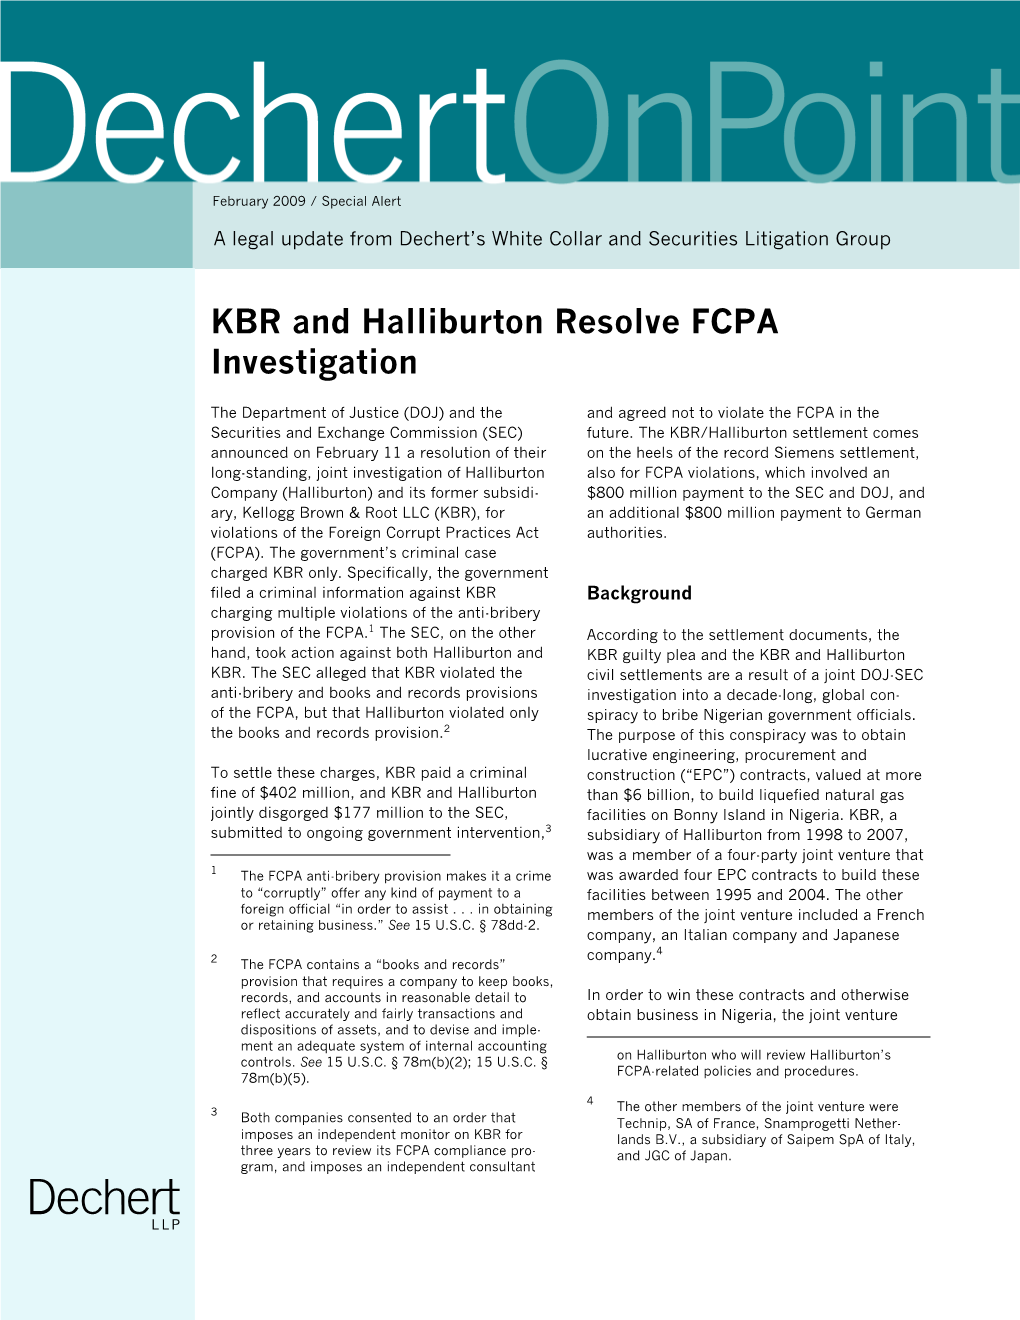 KBR and Halliburton Resolve FCPA Investigation